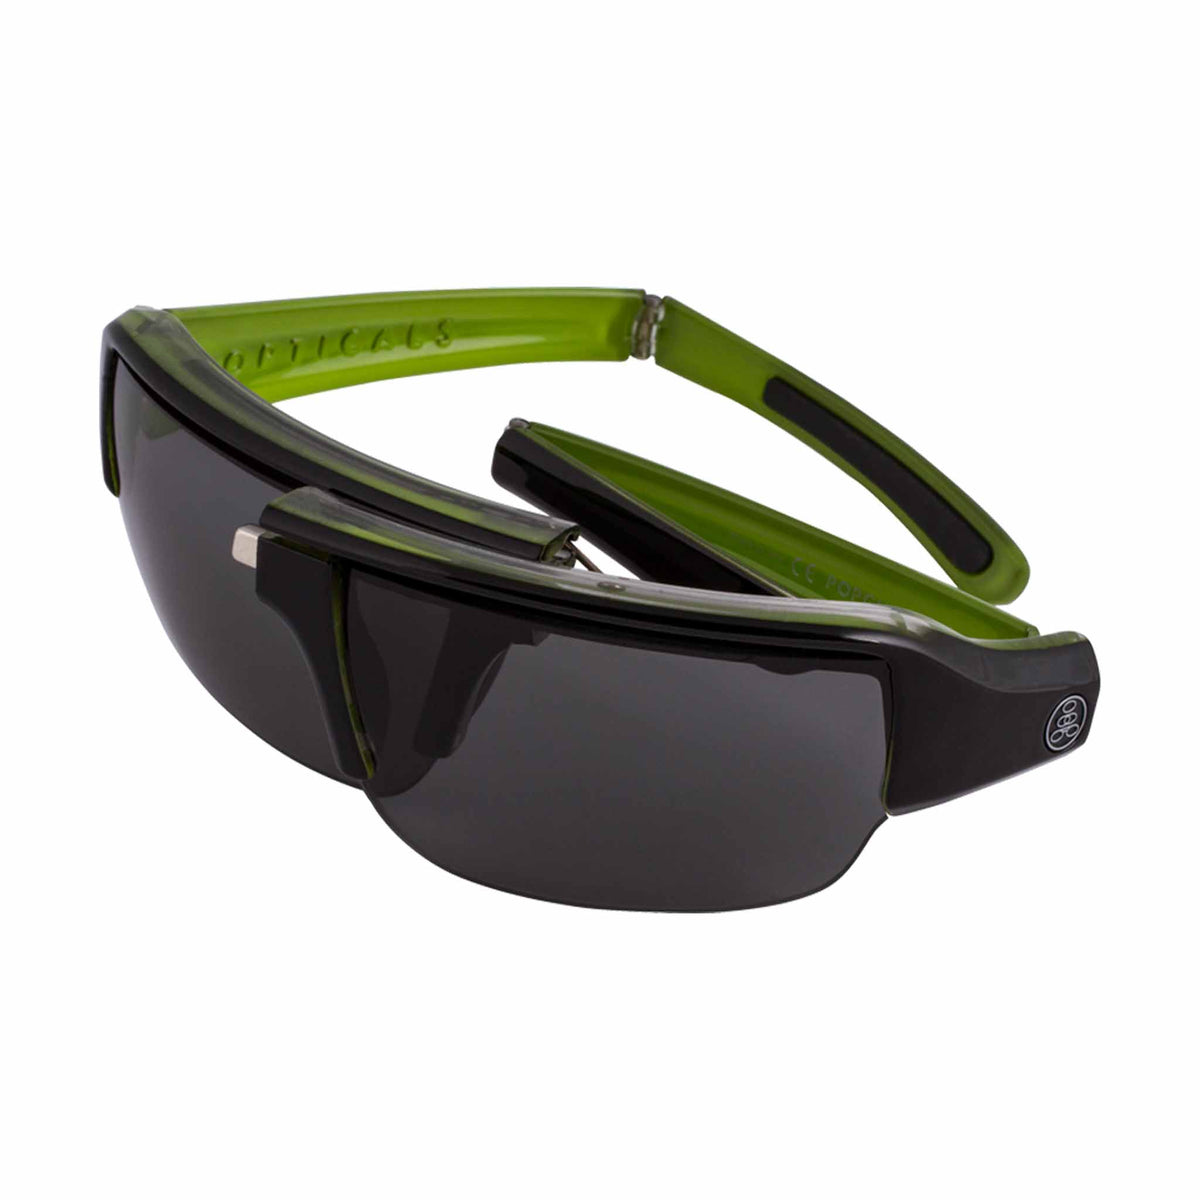 Popticals, Premium Compact Sunglasses, PopGun, 040010-GLGP, Polarized Sunglasses, Gloss Black over Green Crystal Frame, Gray Lenses, Spider View